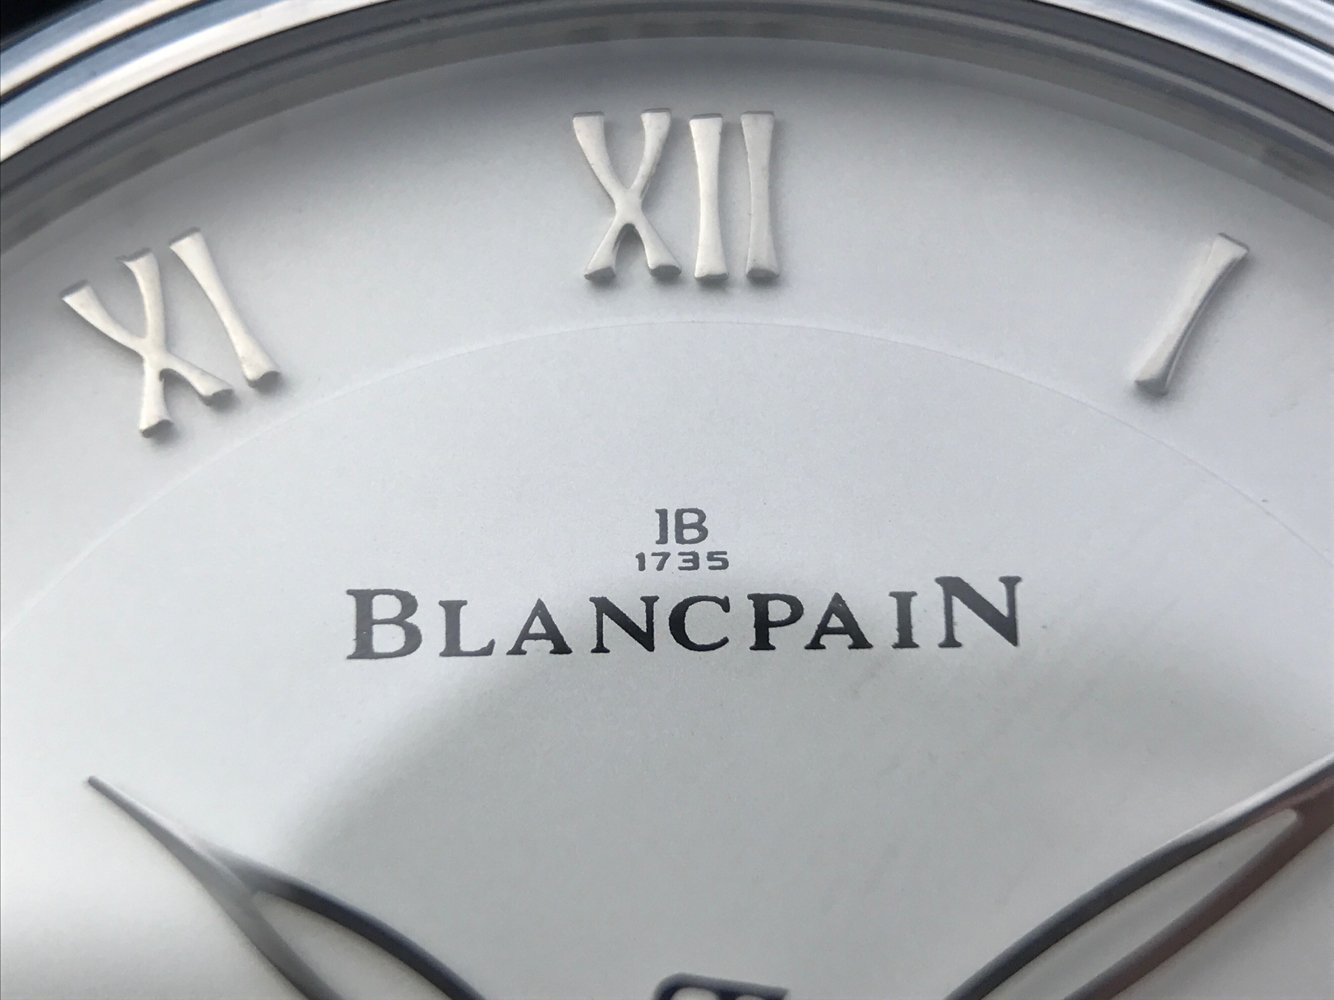 Blancpain Villeret Grande Date 6669-1127-55B